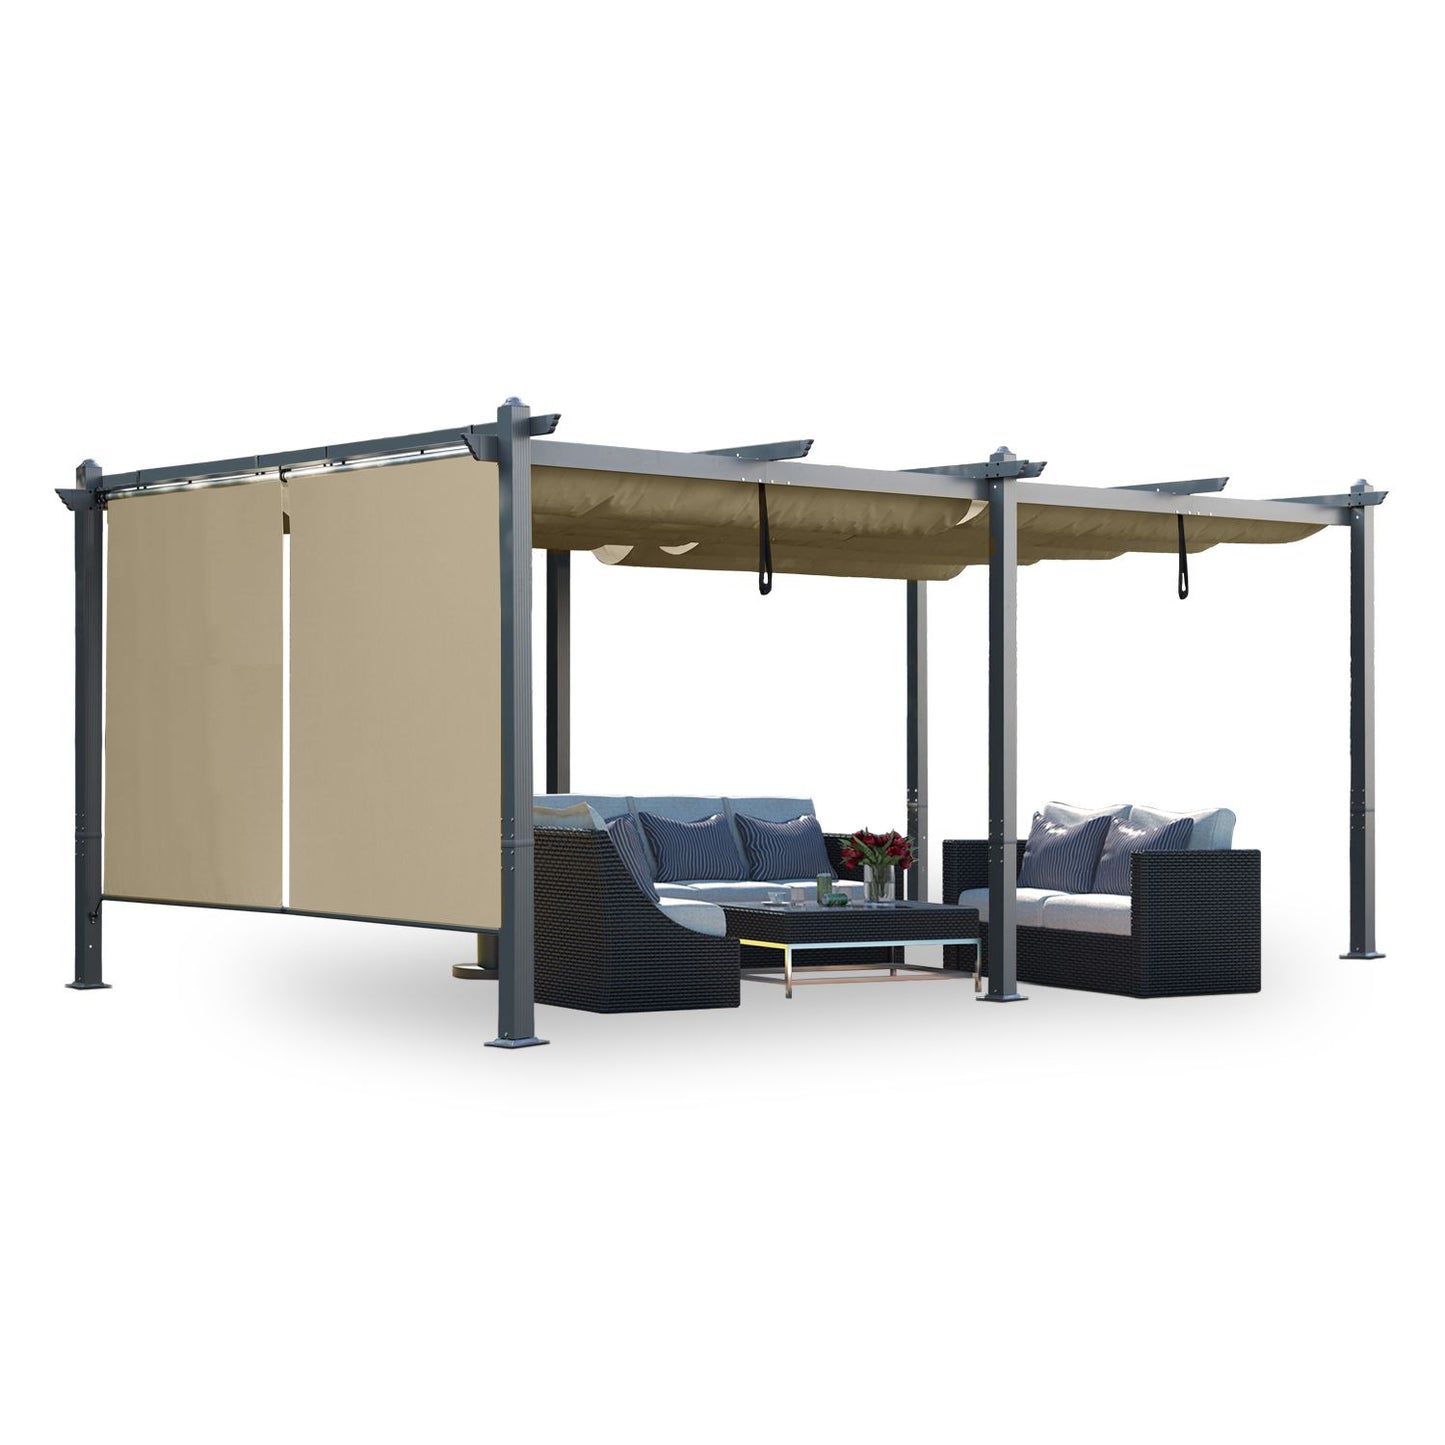 12 x 20 FT Outdoor Pergola with Retractable Shade Canopy, Aluminum Frame, Roller Shade Curtain- khaki/Charcoal Gray